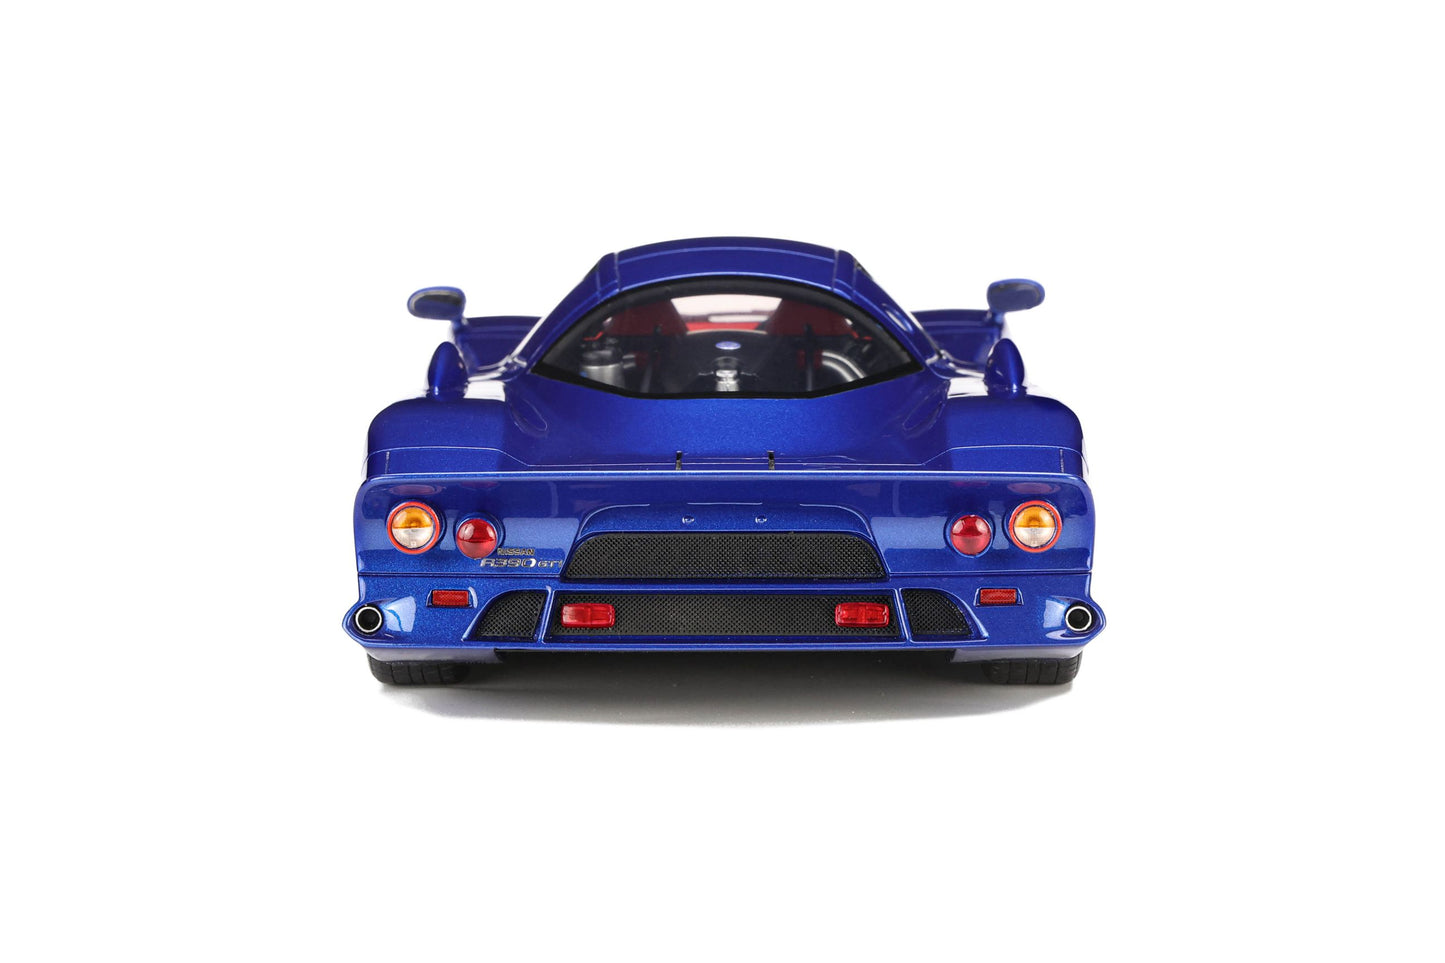 GT Spirit - Nissan R390 GT1 Road Car (Metallic Blue) 1:18 Scale Model Car